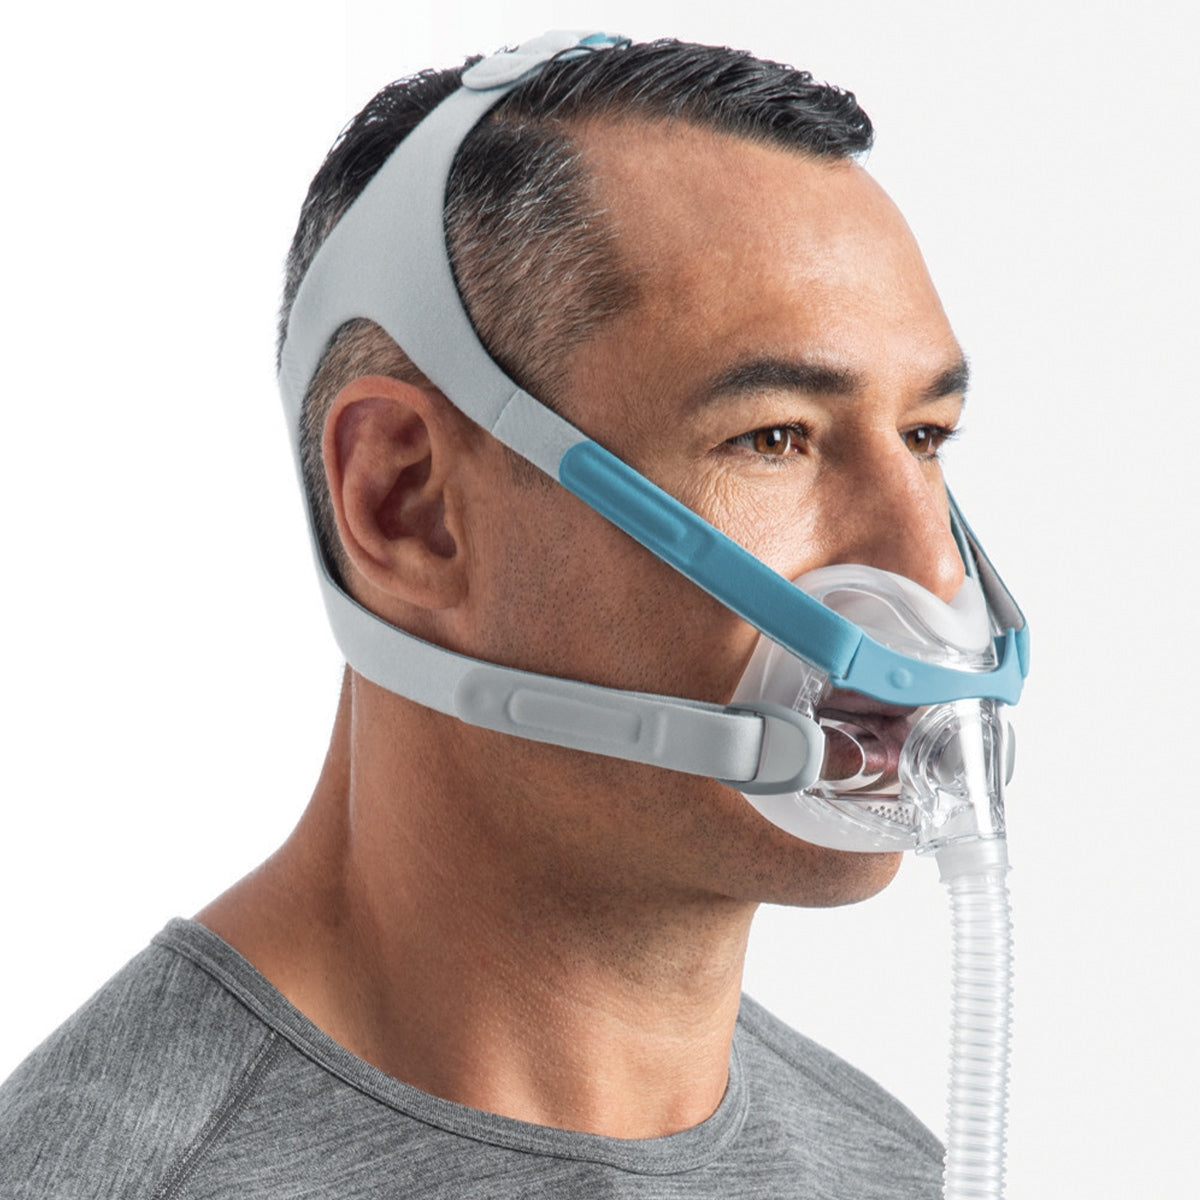 Evora Full Face CPAP/BiPAP Mask with Headgear